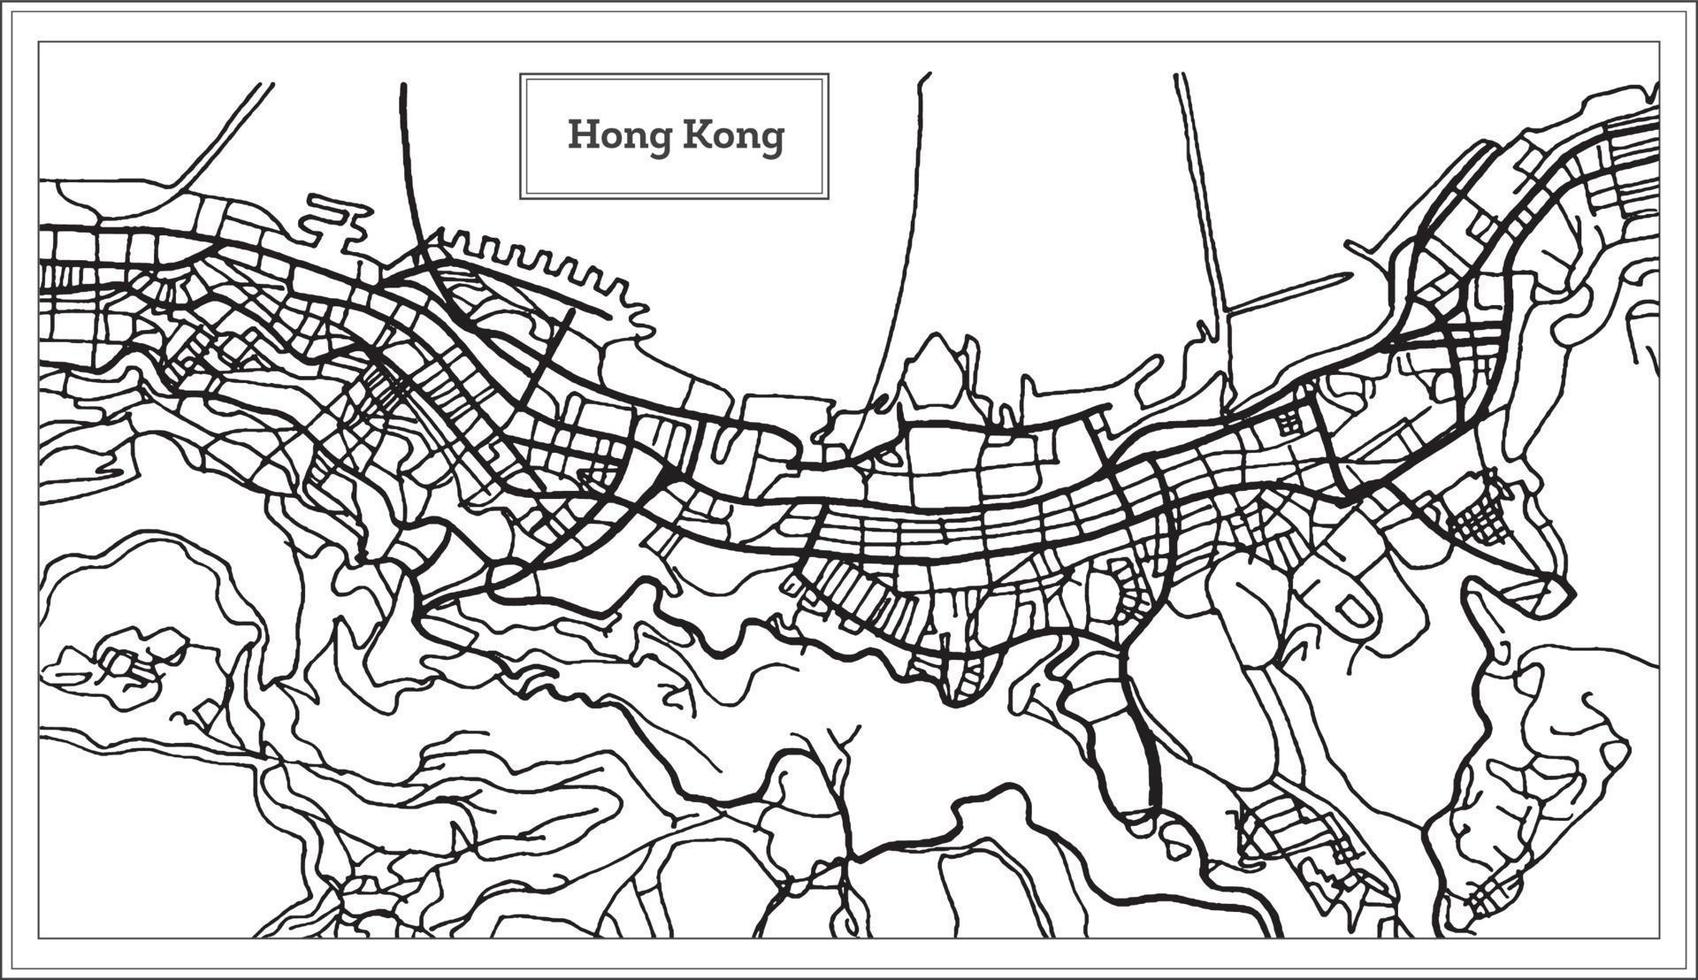 hong hong Cina città carta geografica nel nero e bianca colore. vettore